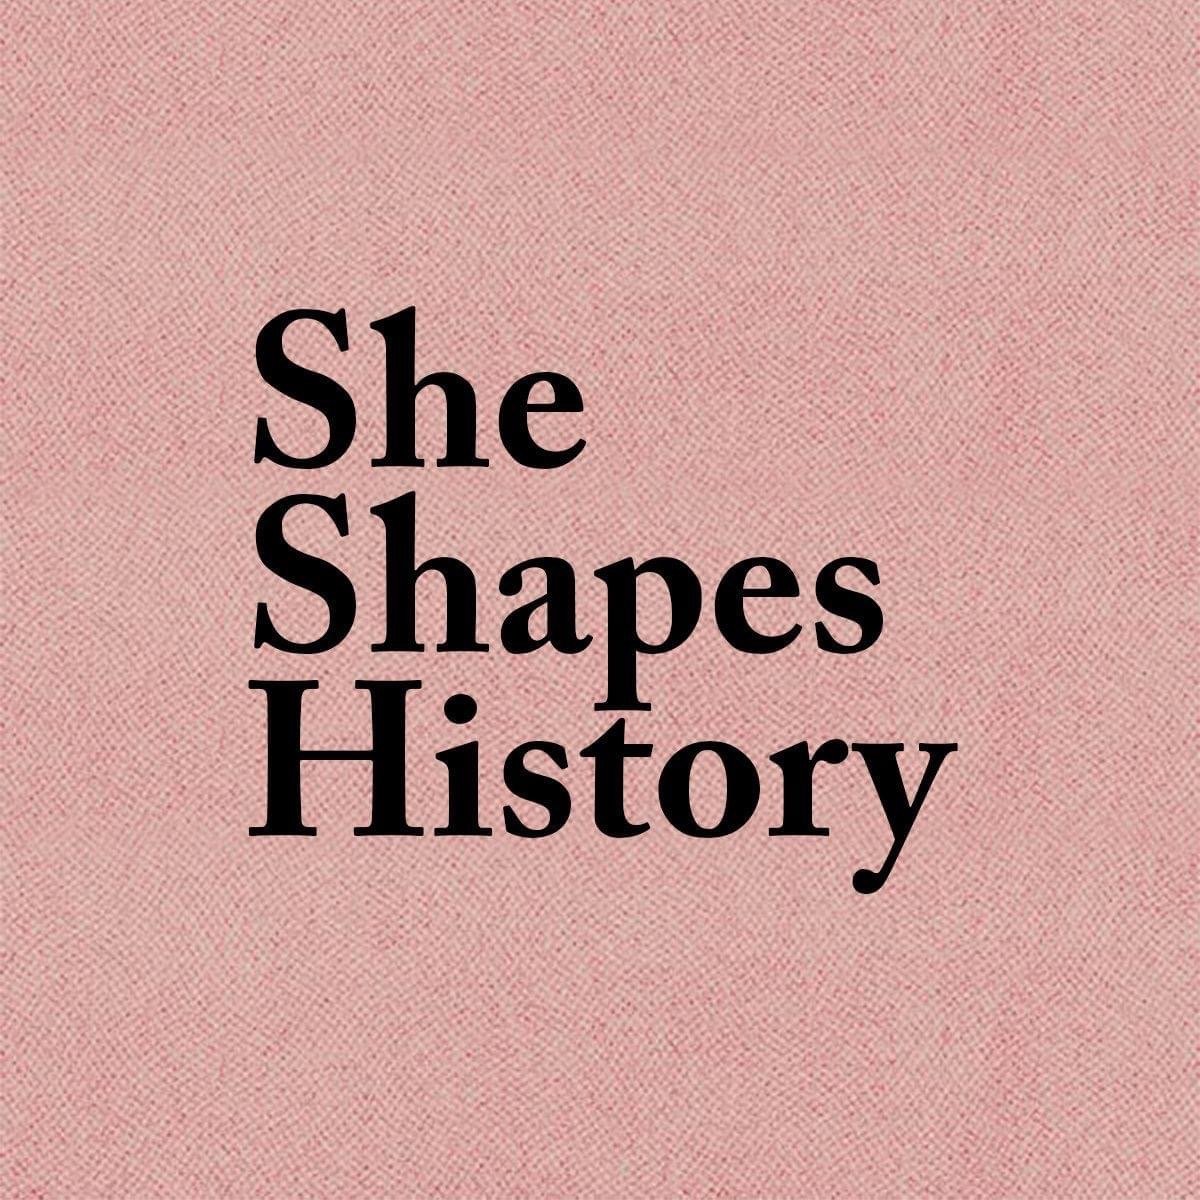 She Shapes History logo on pink .jpg